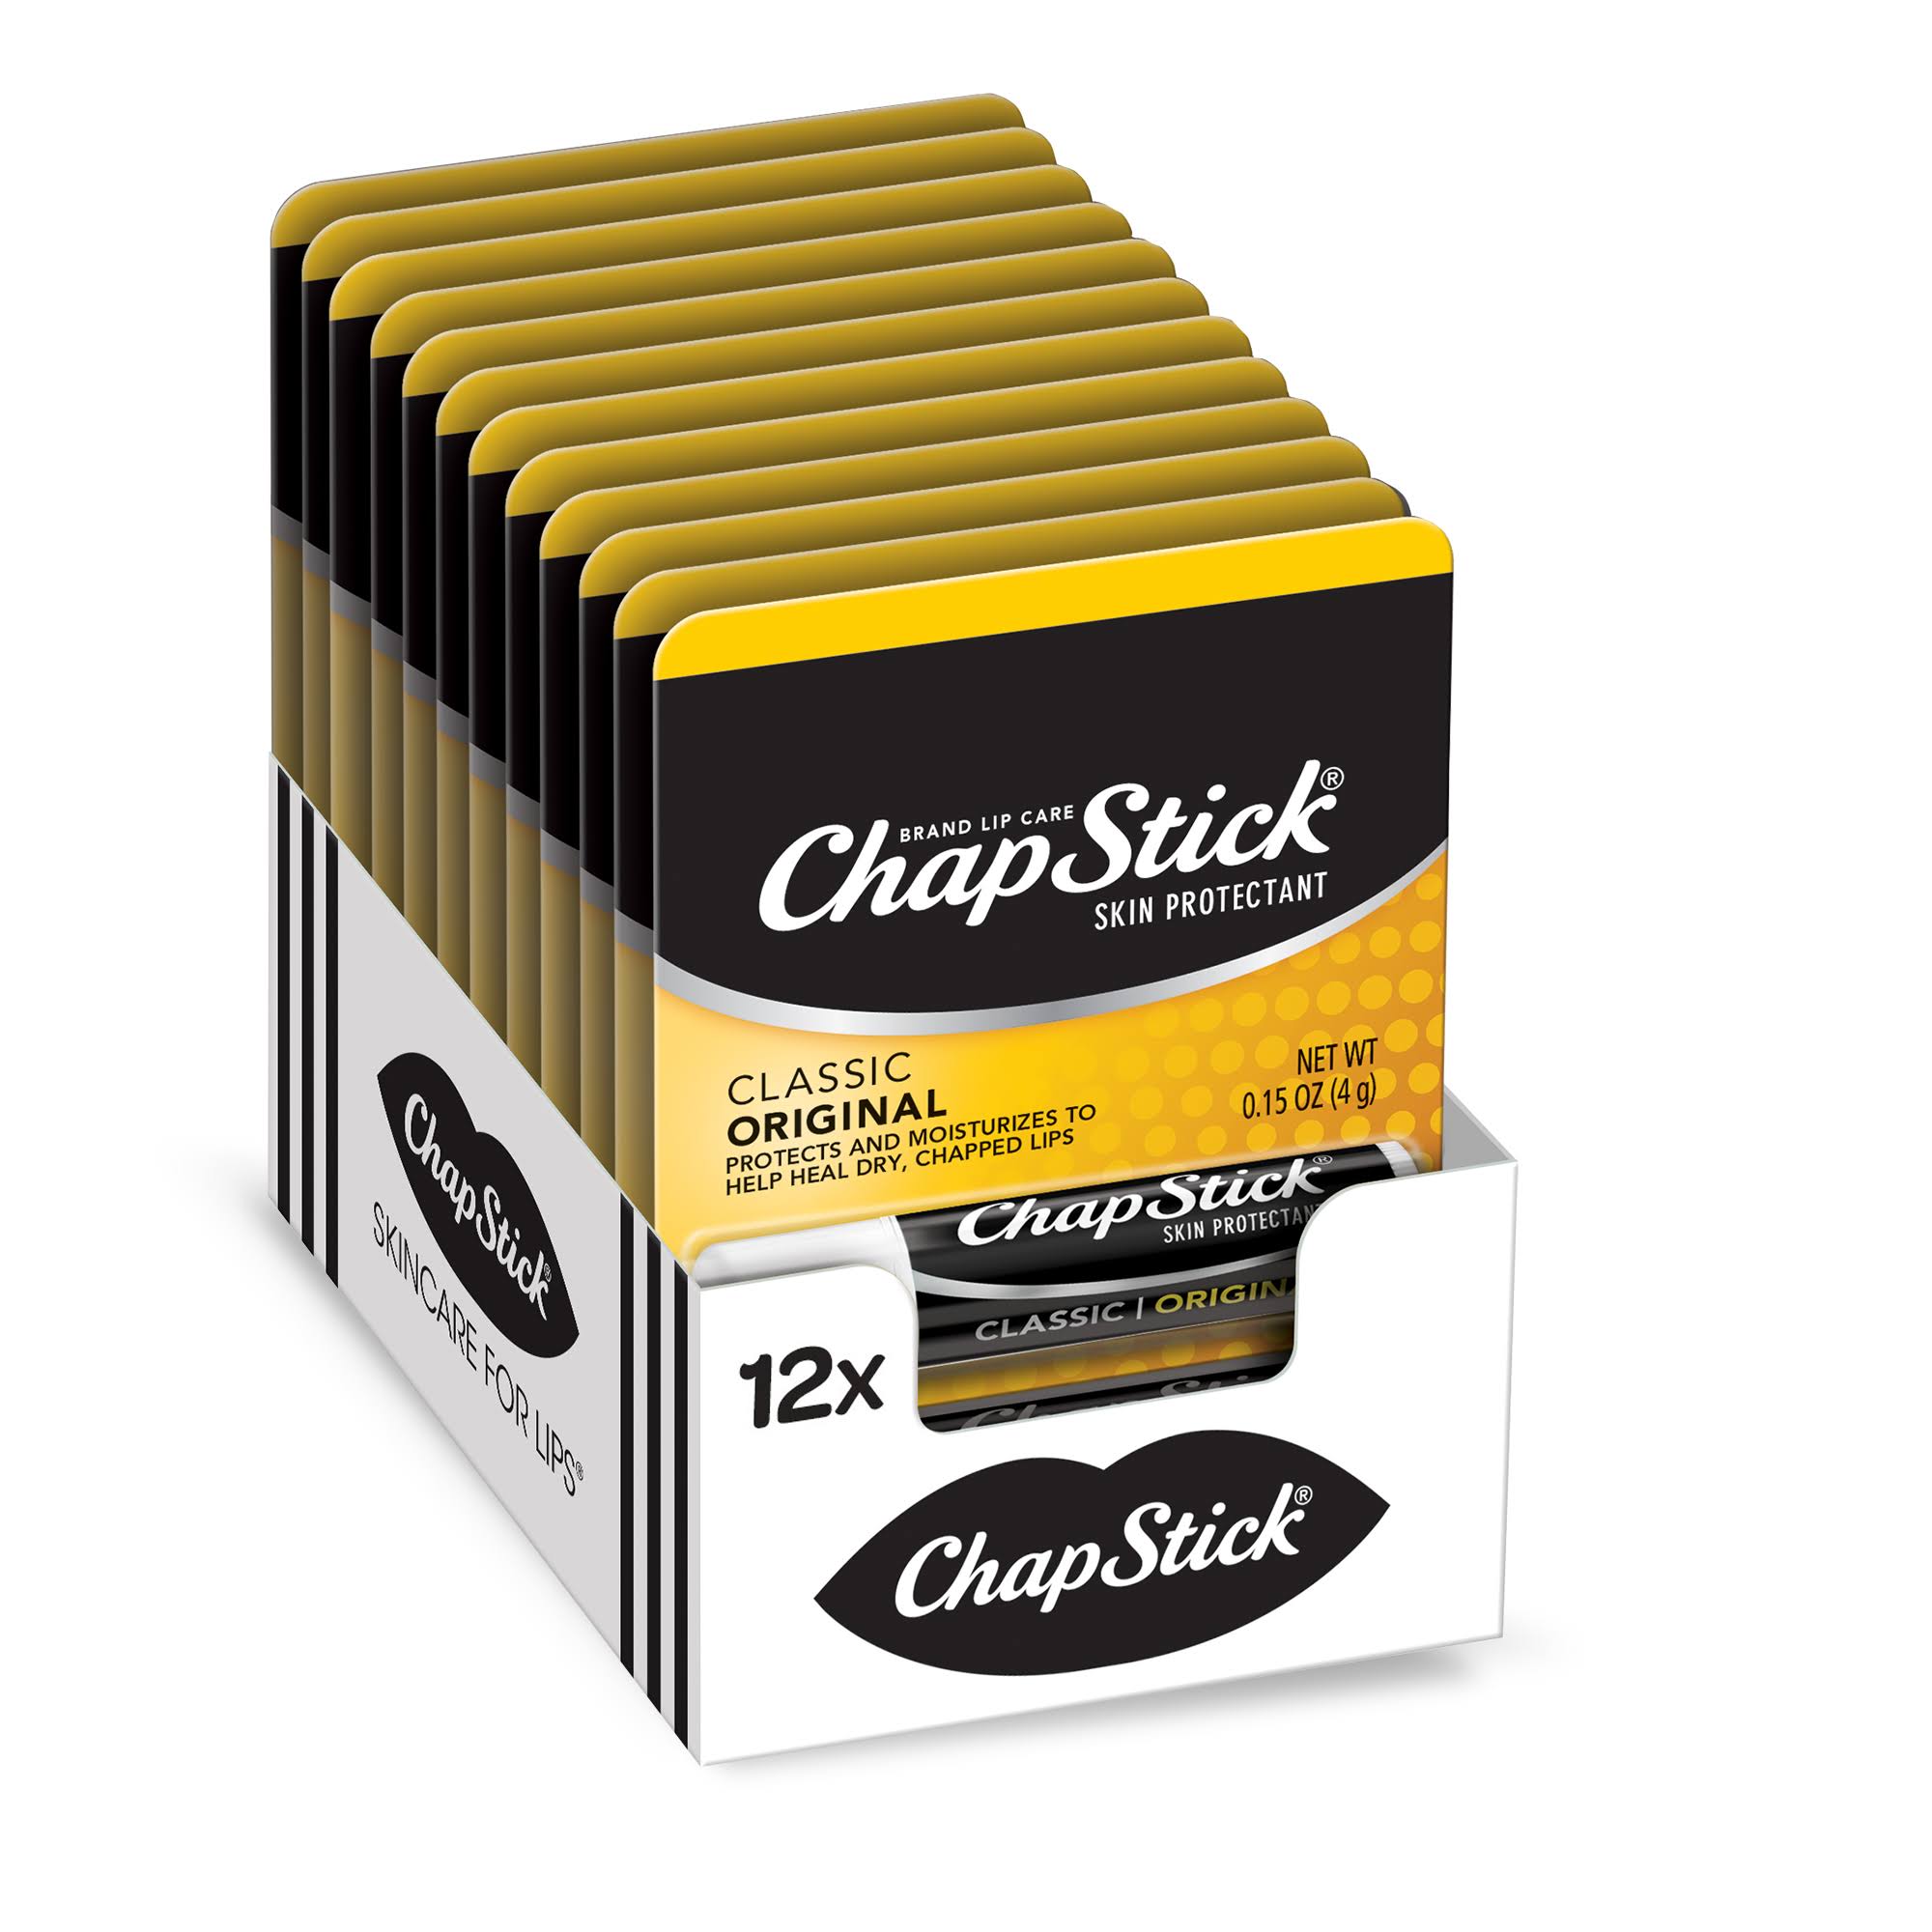 Chapstick Skin Protectant, Original, Classic - 0.15 oz